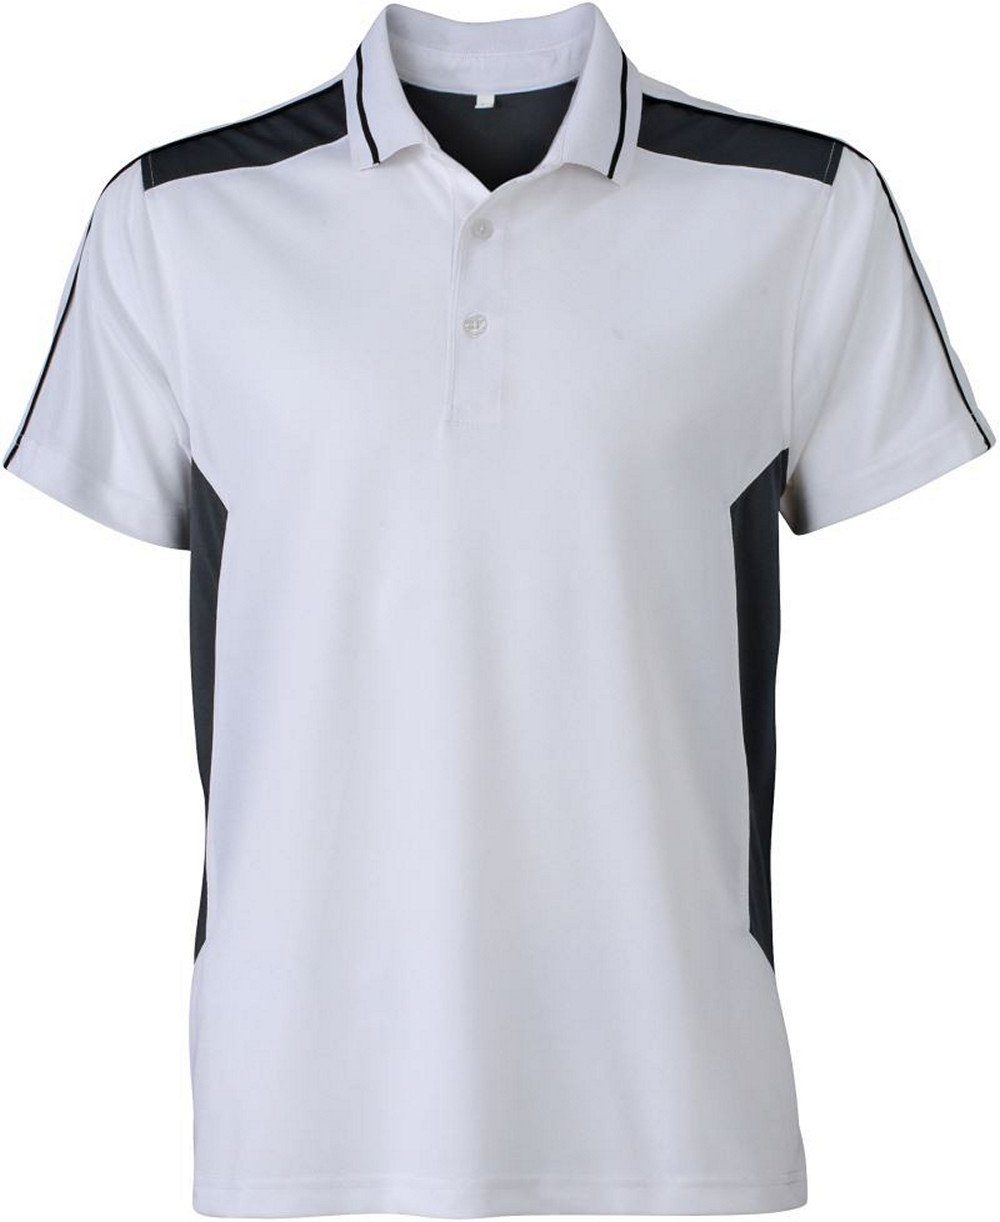 James & Nicholson Poloshirt JN 828 Herren Workwear Piqué Polo weiß | Poloshirts